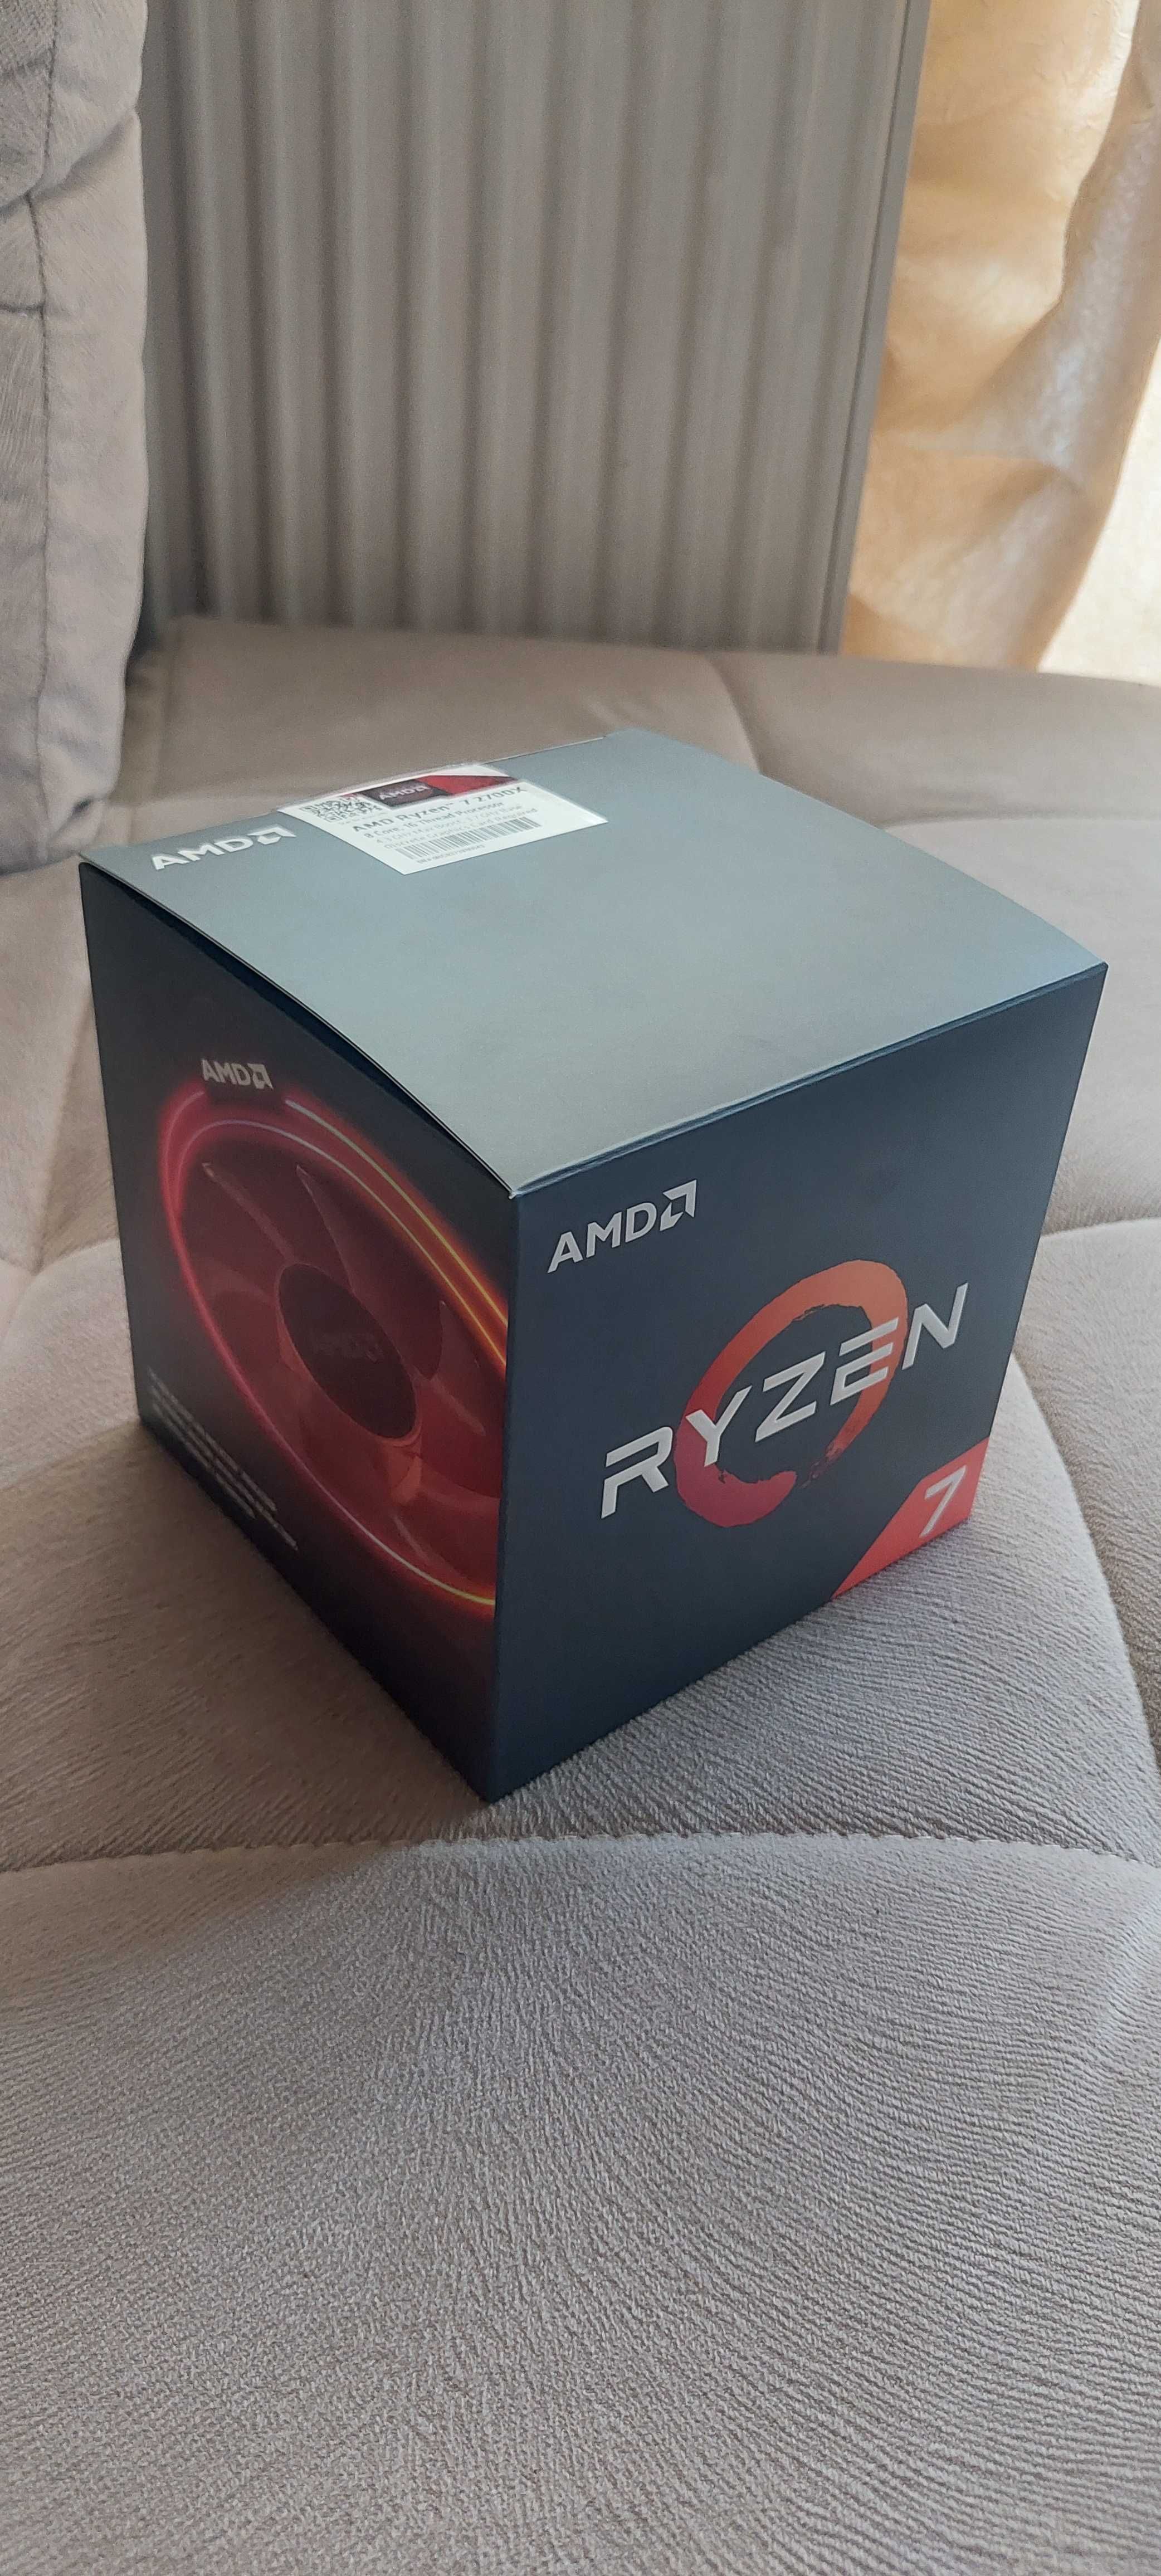 Procesor AMD Ryzen 2700X